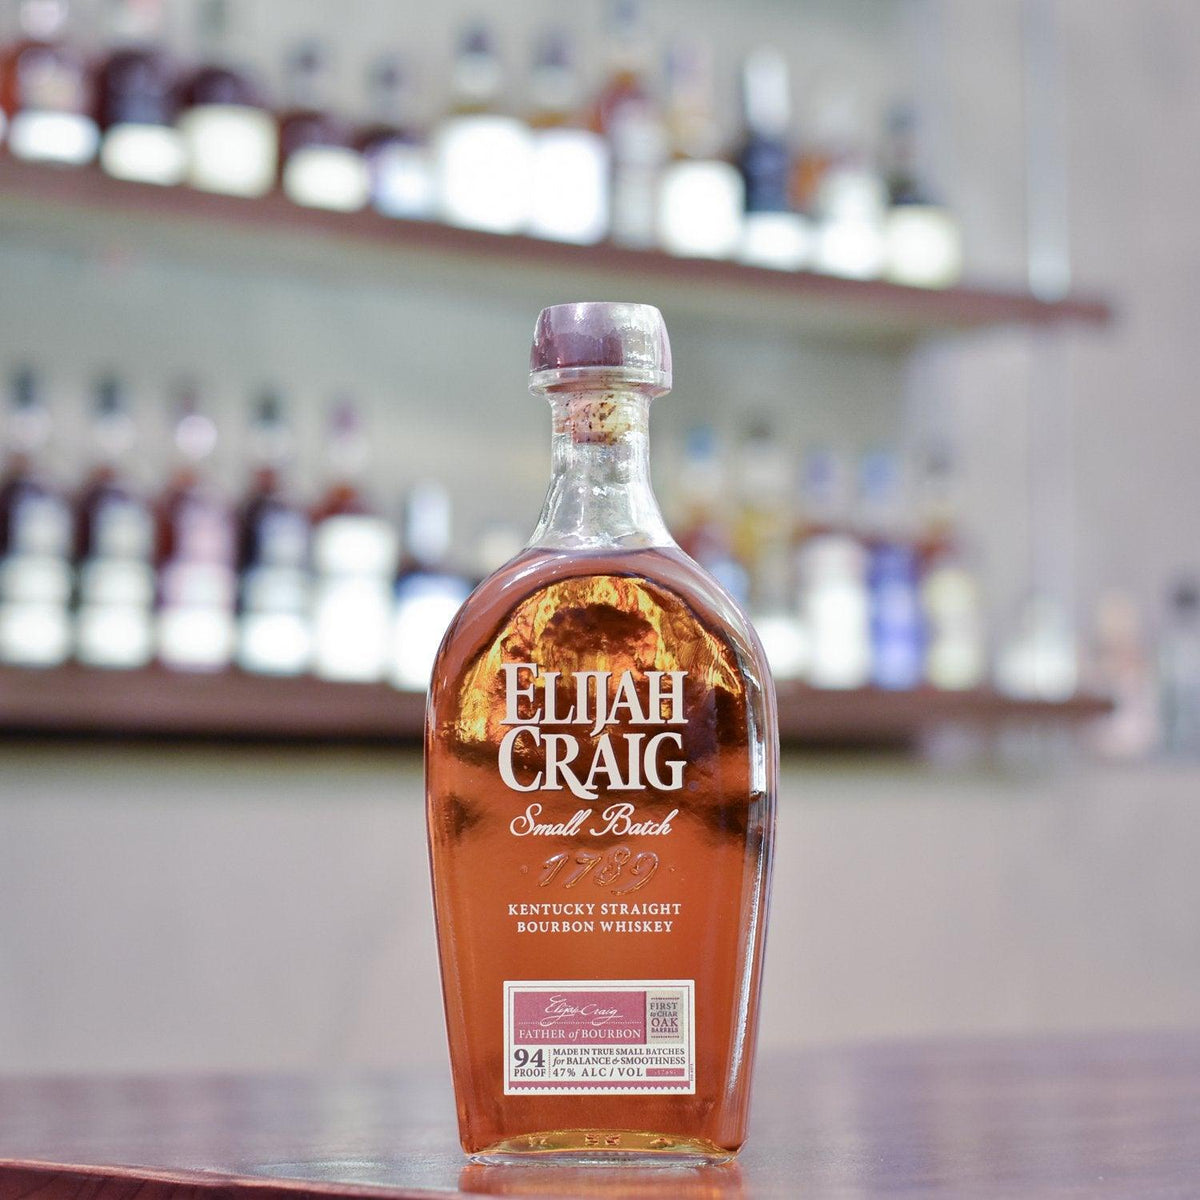 Elijah Craig Small Batch Bourbon Whiskey - The Rare Malt